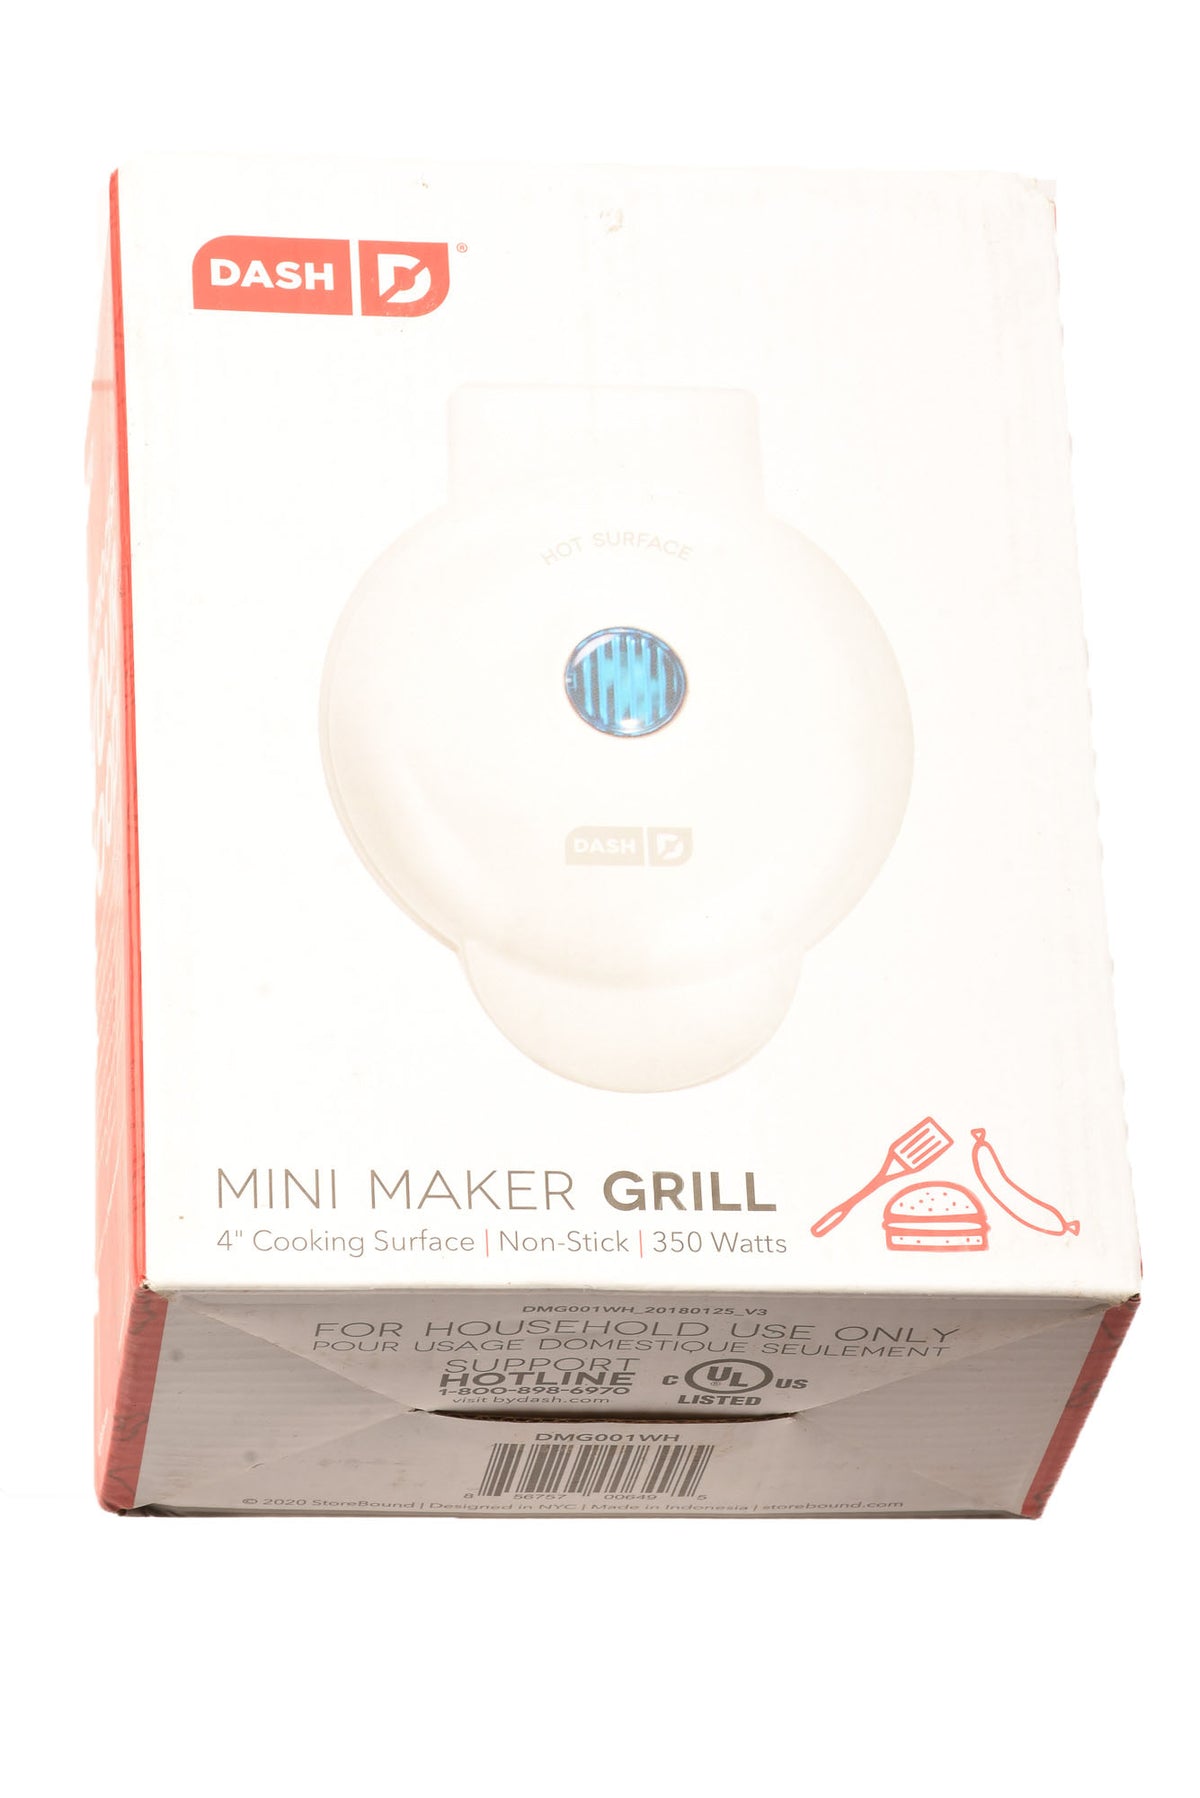 DASH DMG001 Mini Maker Grill User Manual